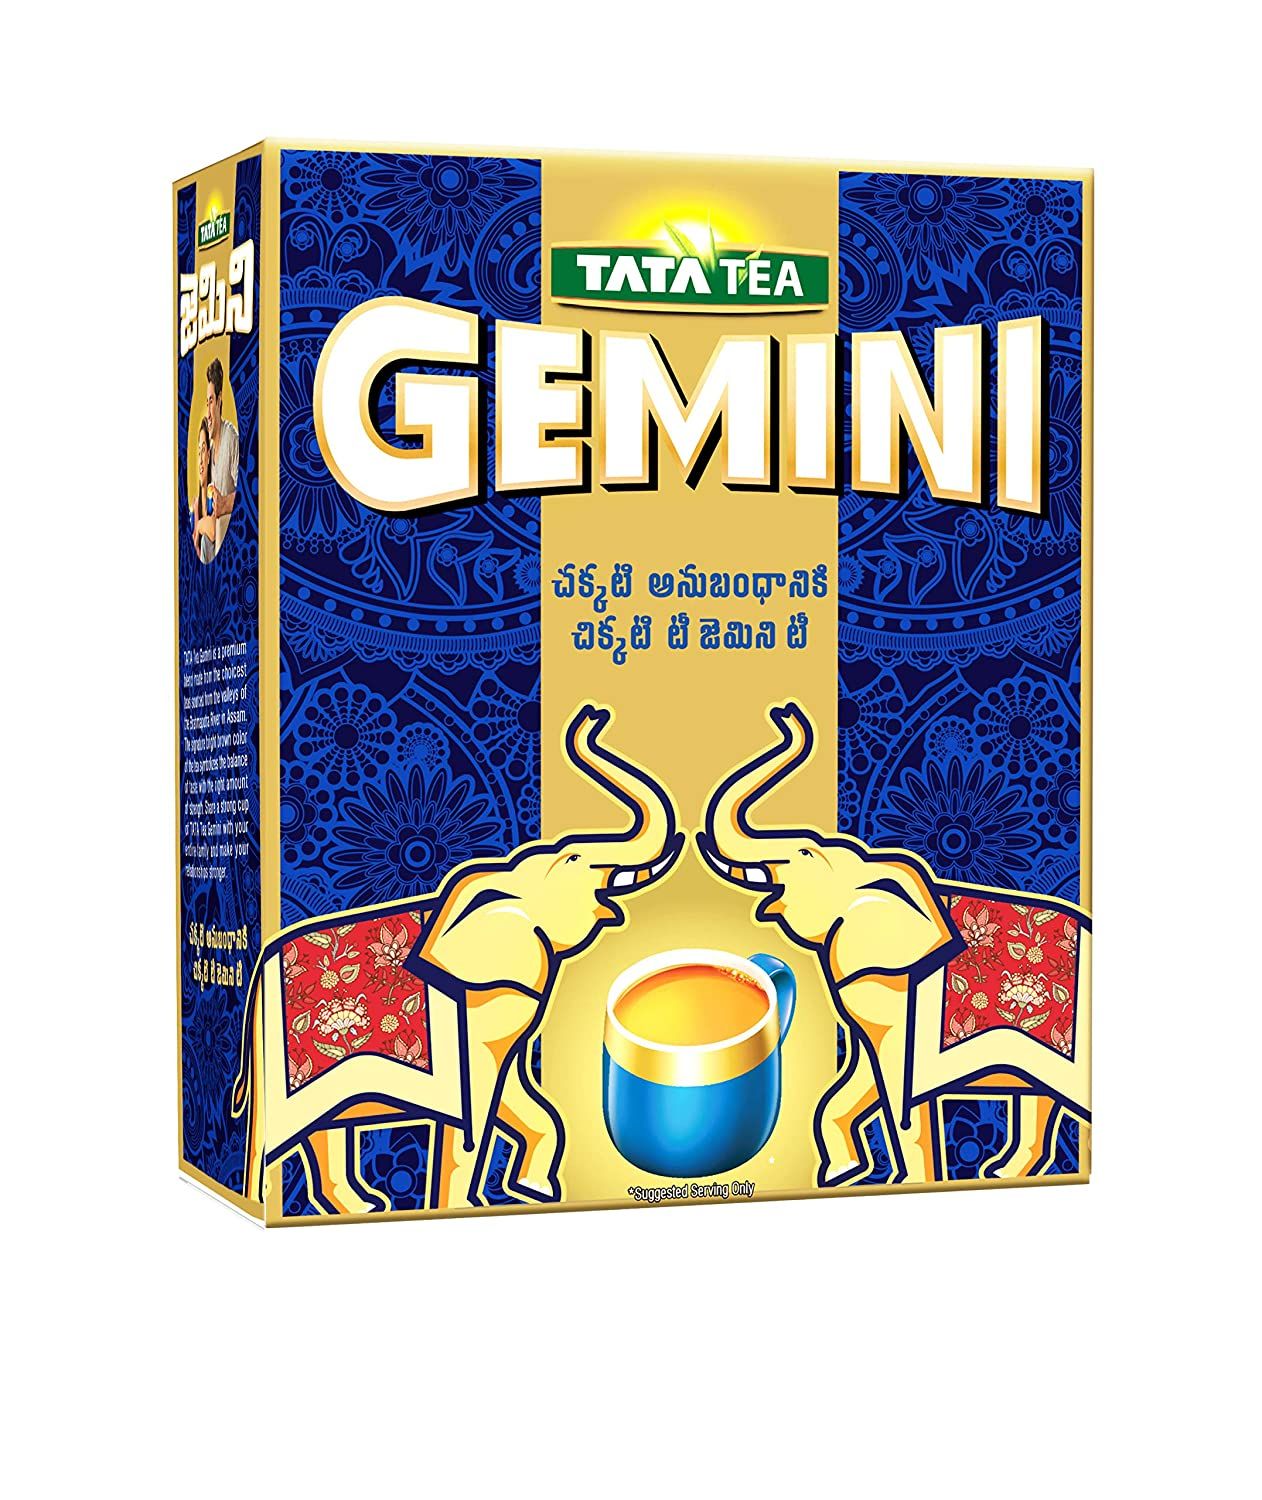 Tata Tea Gemini Tea Image